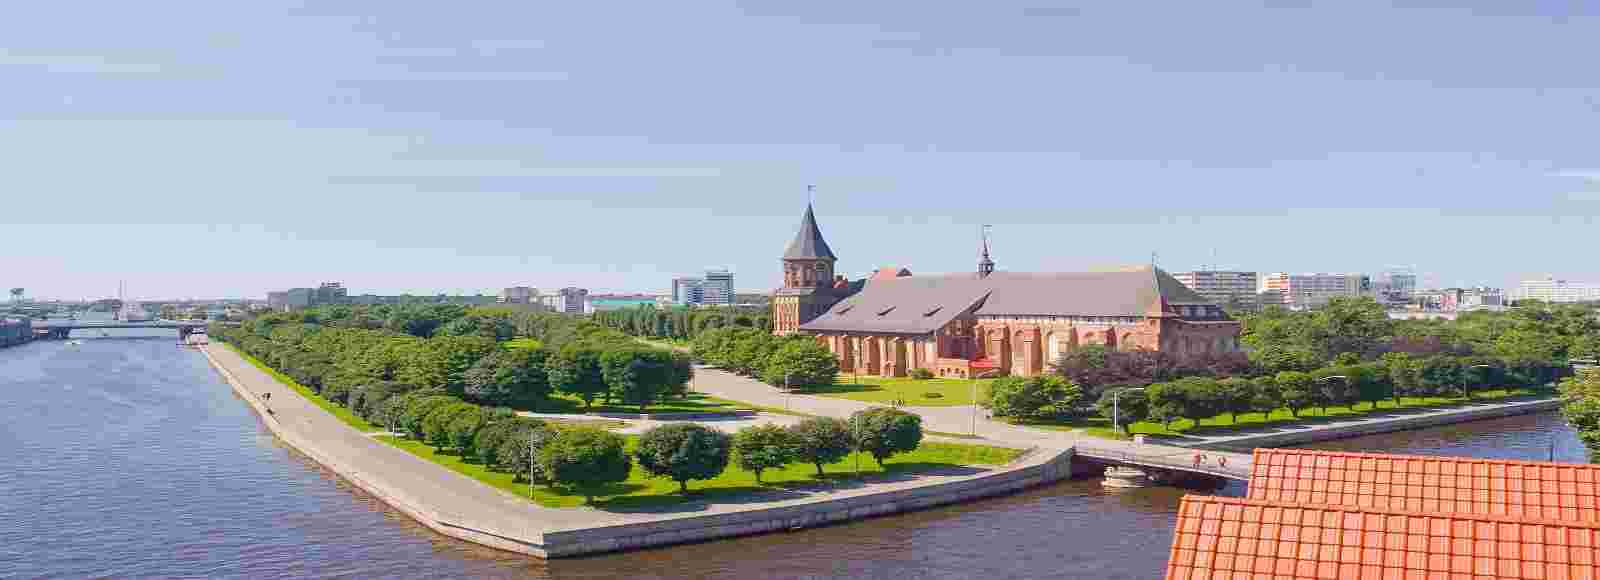 Transfer Offers in Kaliningrad. Low Cost Transfers in  Kaliningrad 